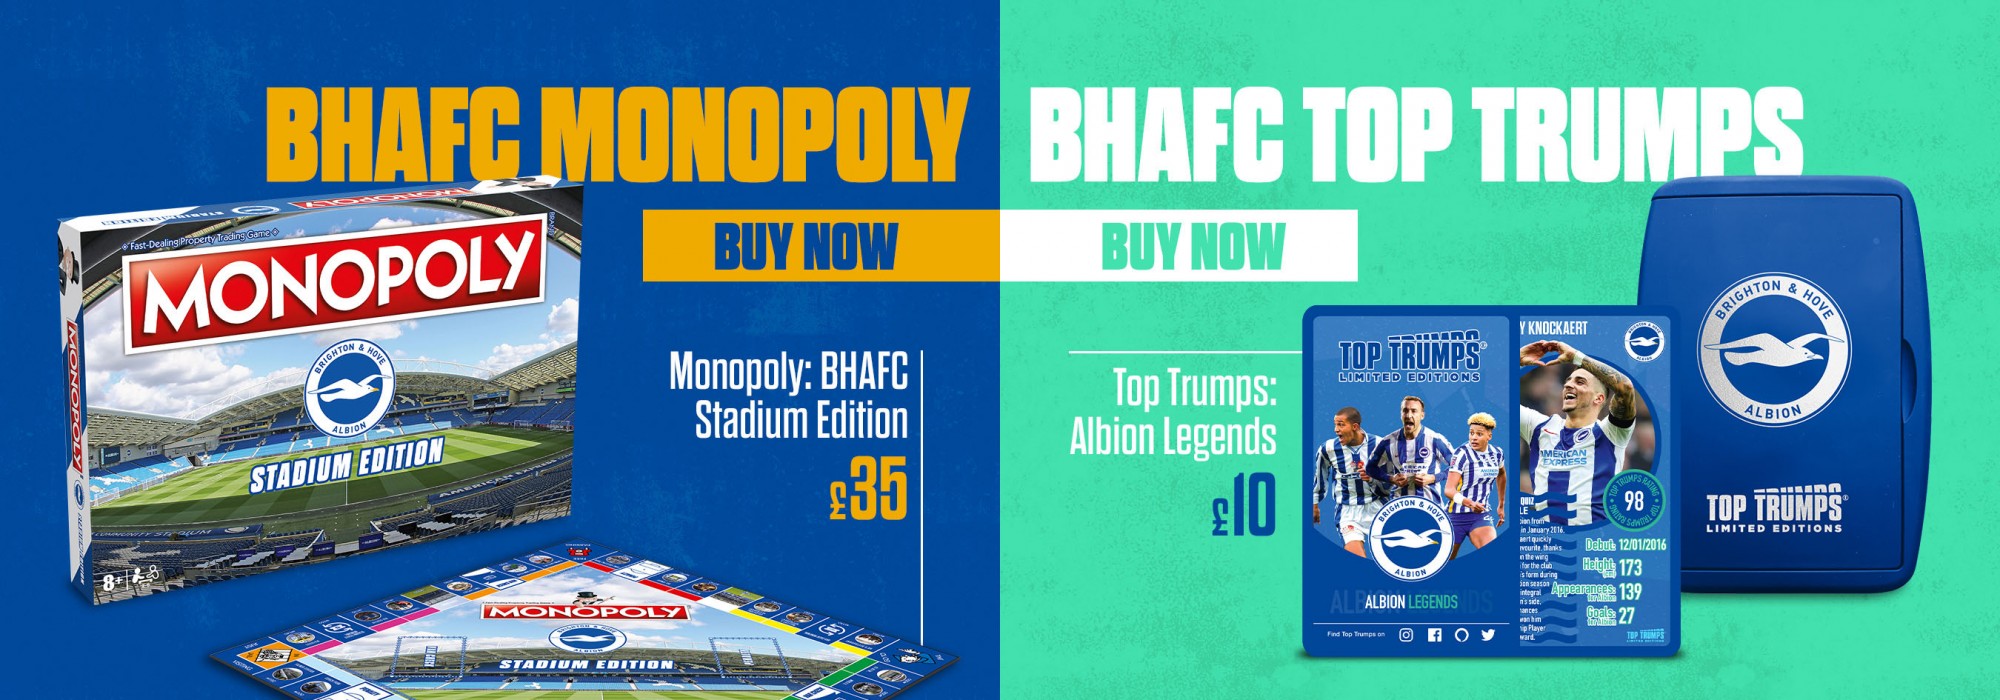 Stadium Edition Monopoly on sale now!